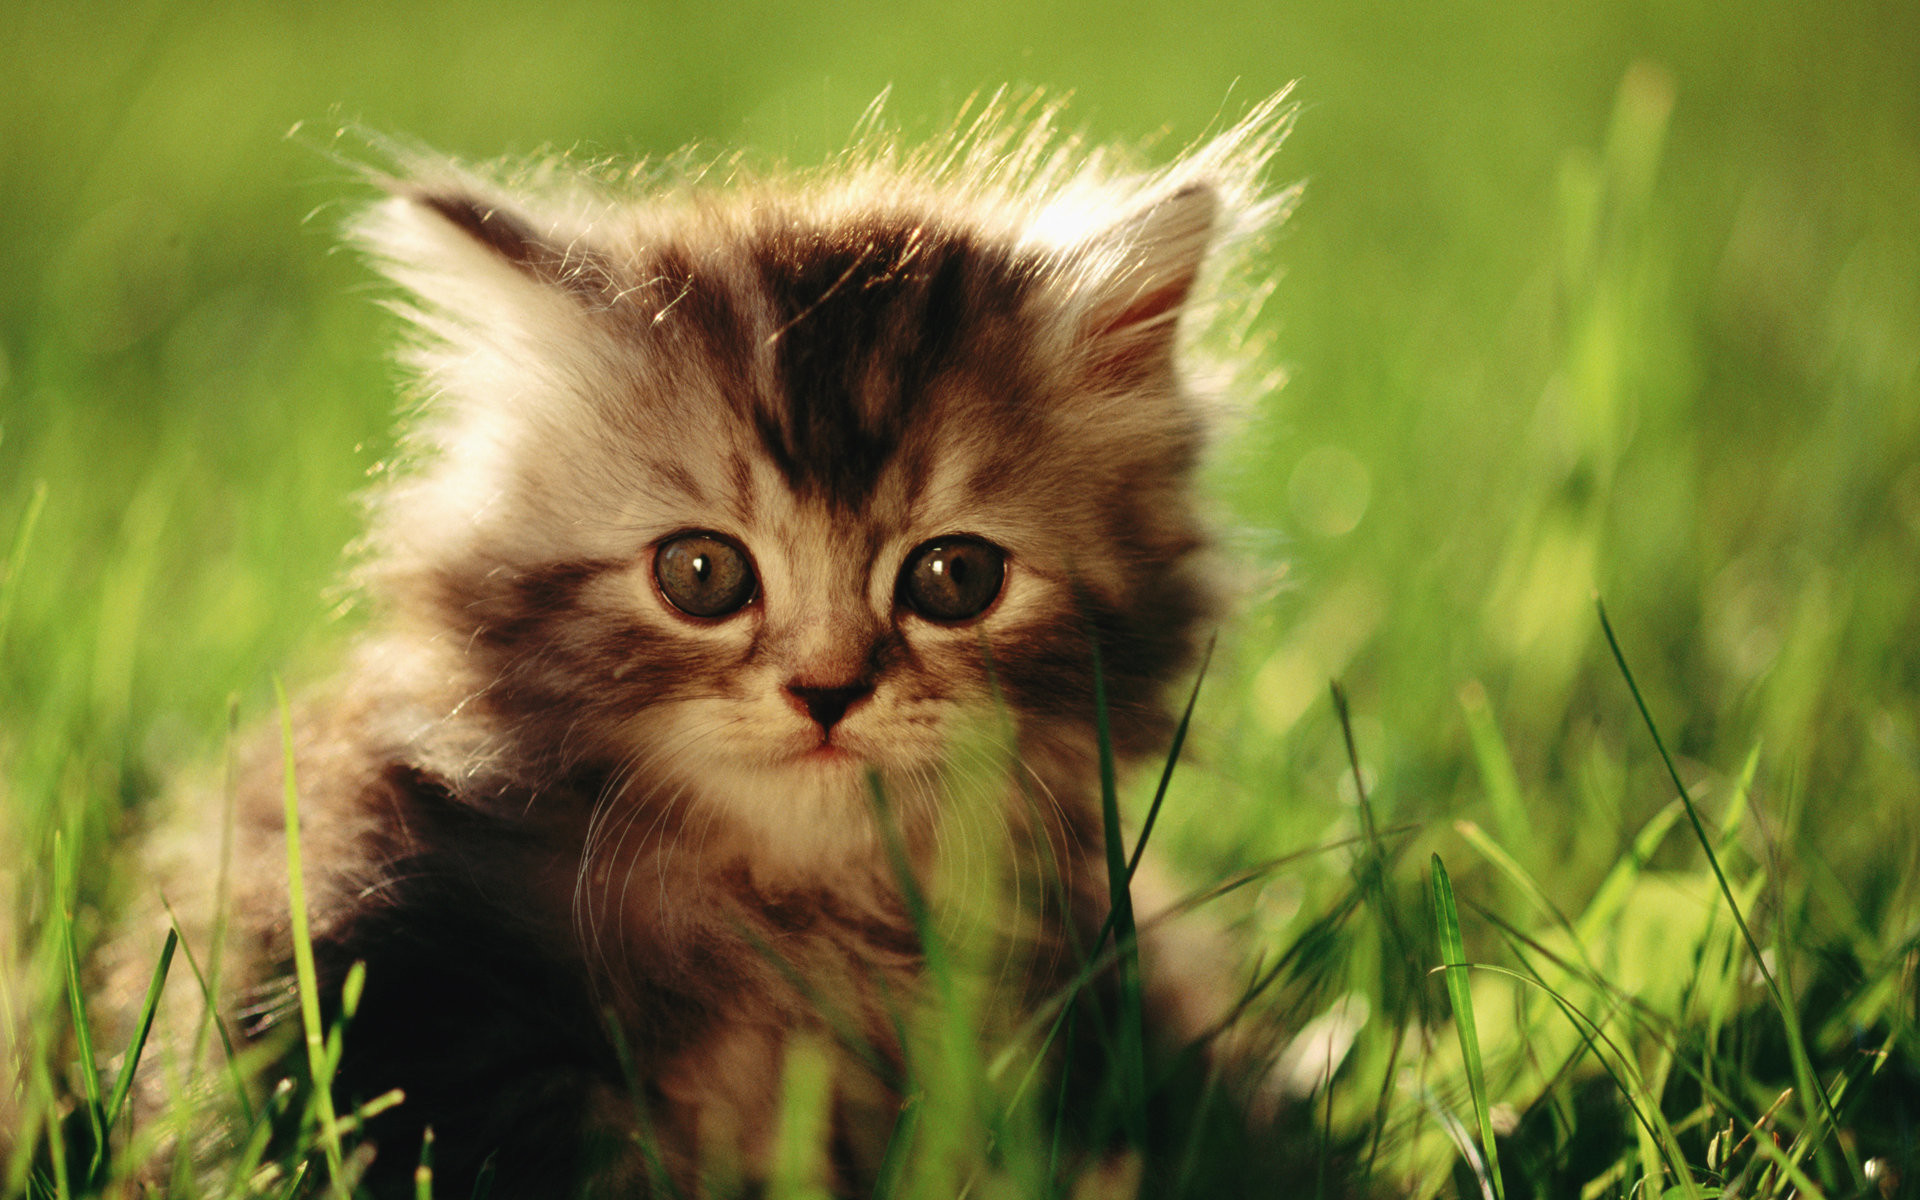 HD Sweet Kitty : Adorable Fluffy Baby Kittens Widescreen Wallpapers  1920*1200 Wallpaper 33